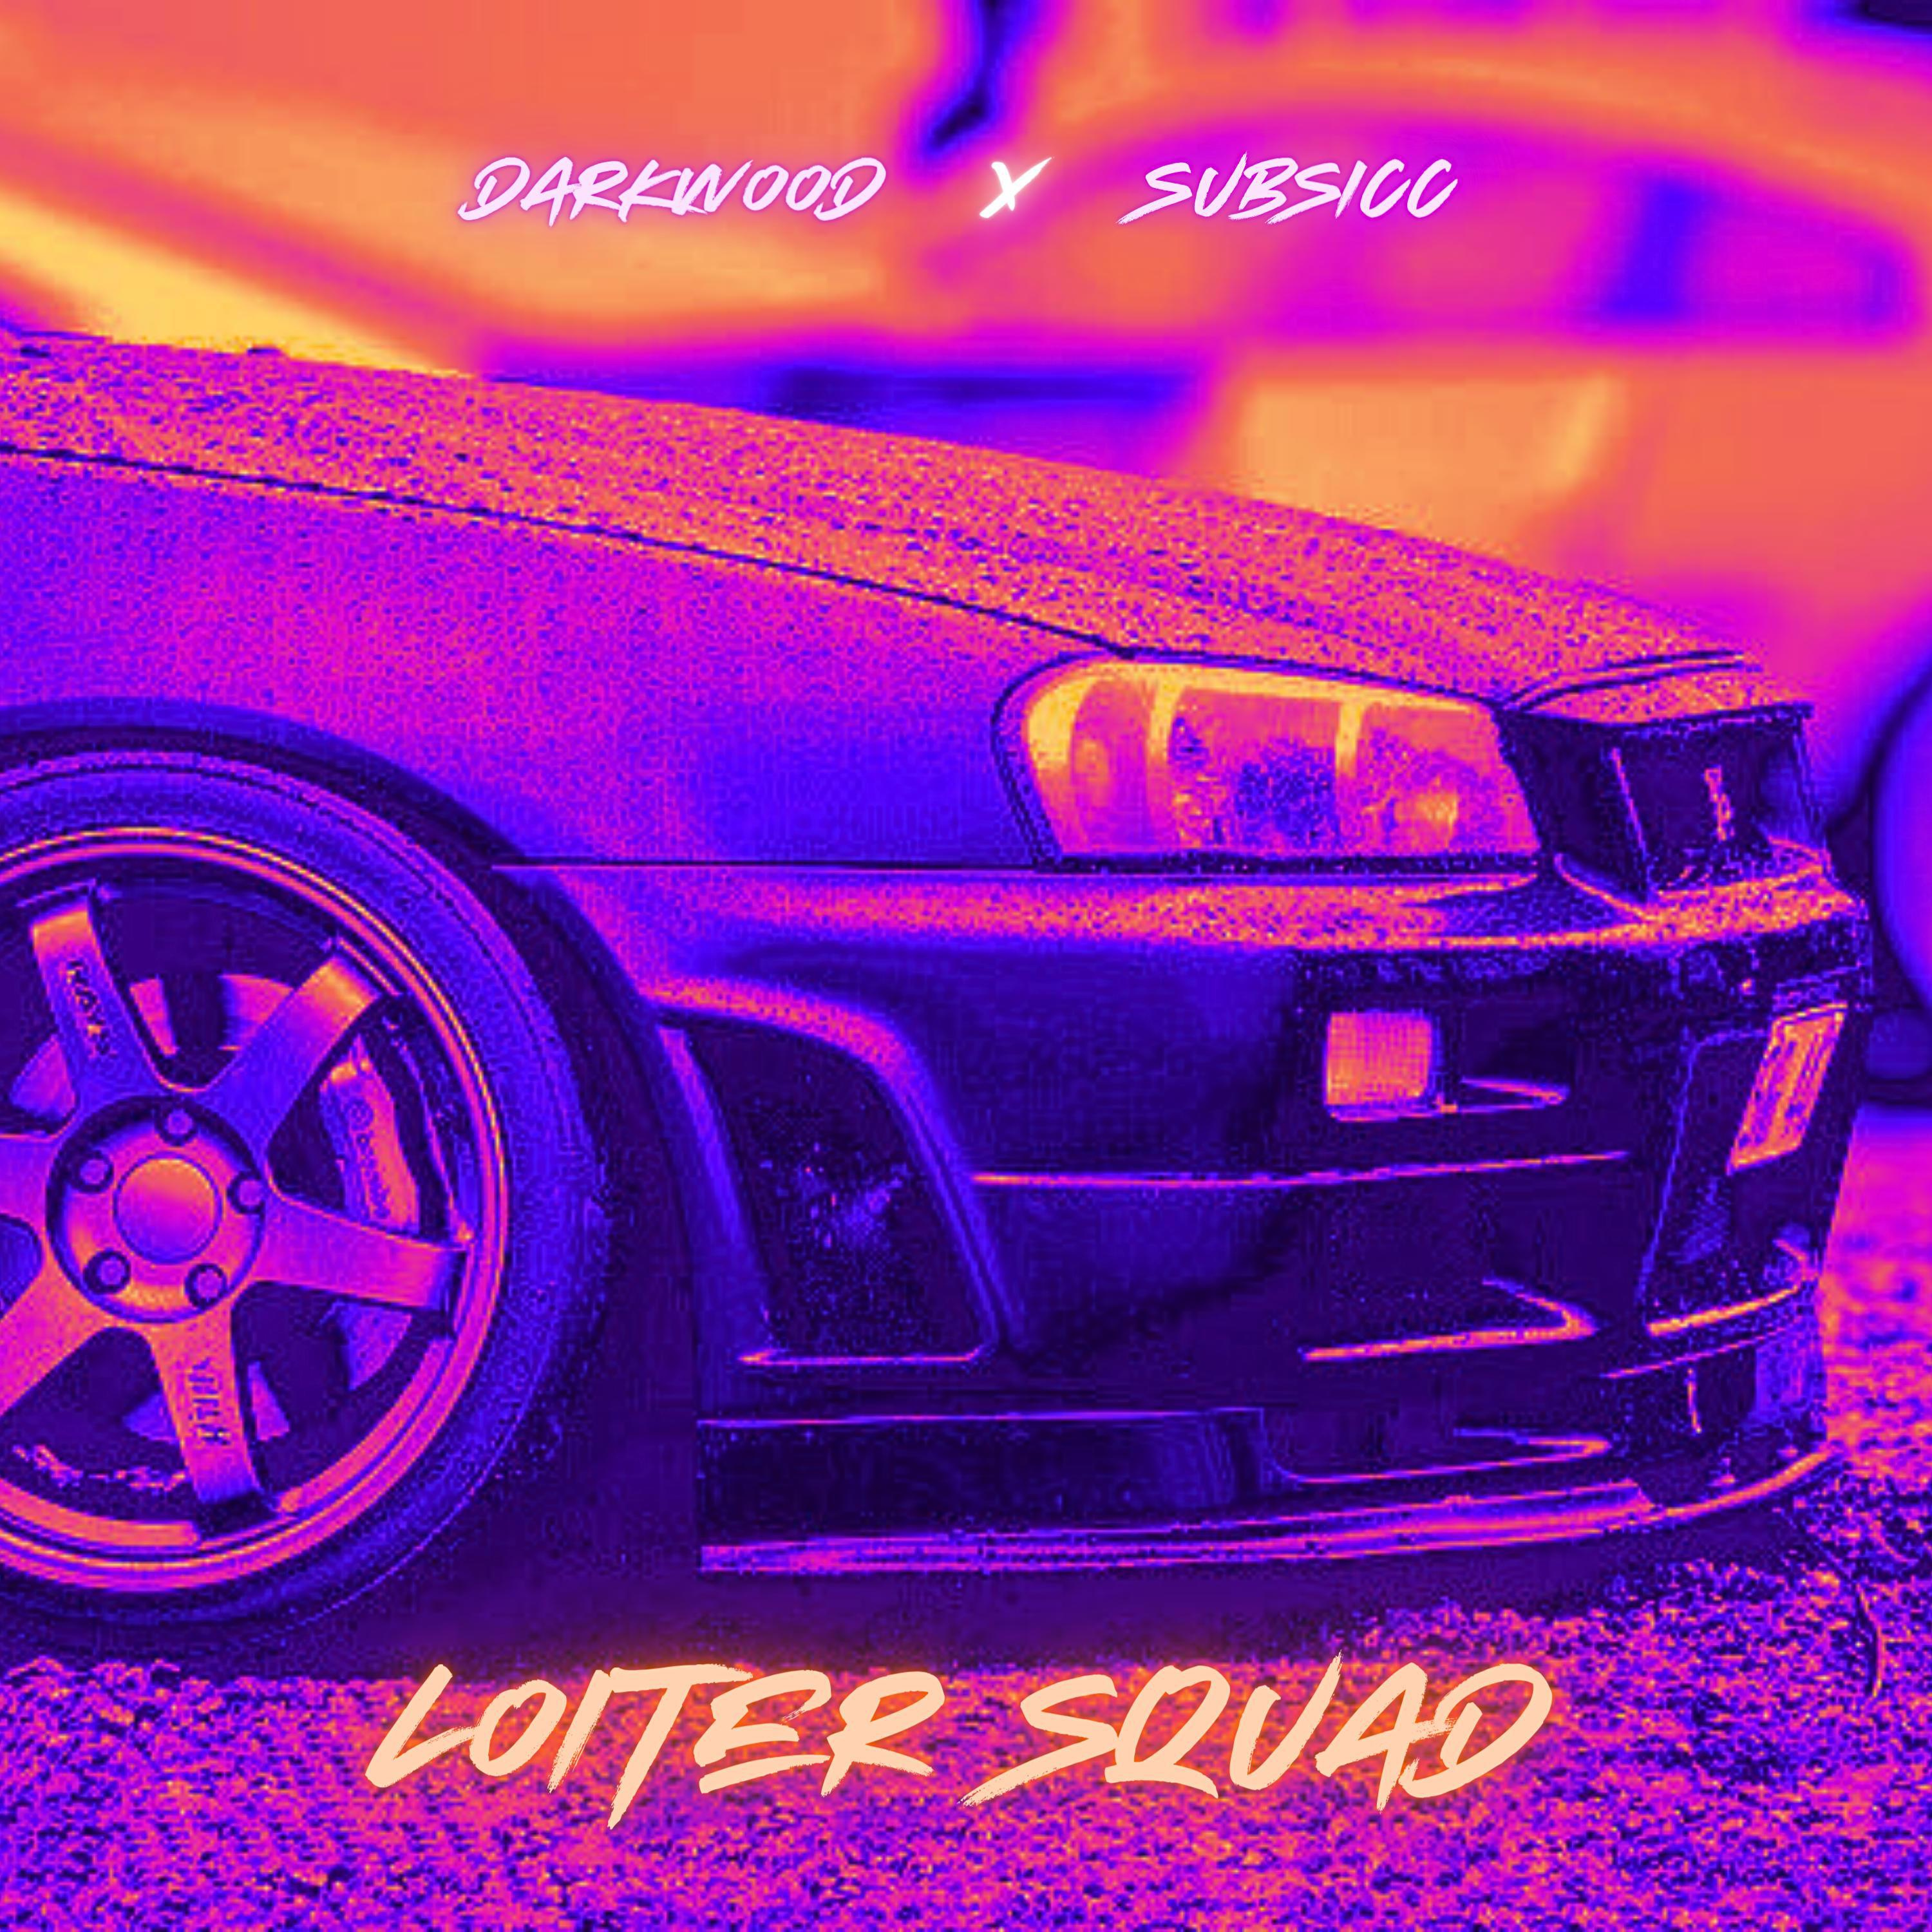 Darkwood - Loiter Squad (feat. Subsicc)